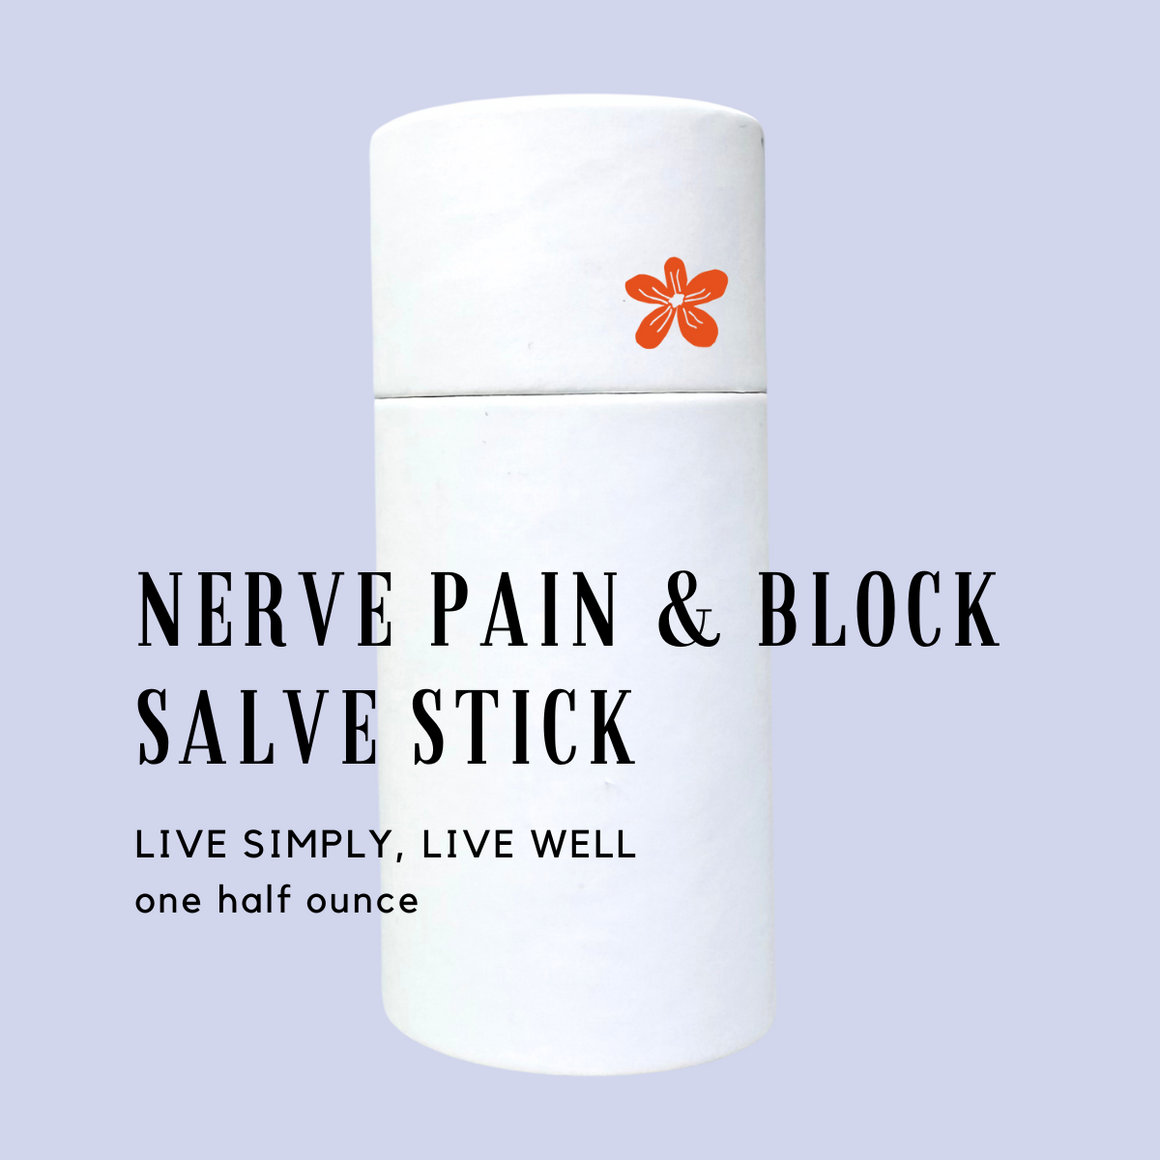 Nerve Pain & Block Salve Stick